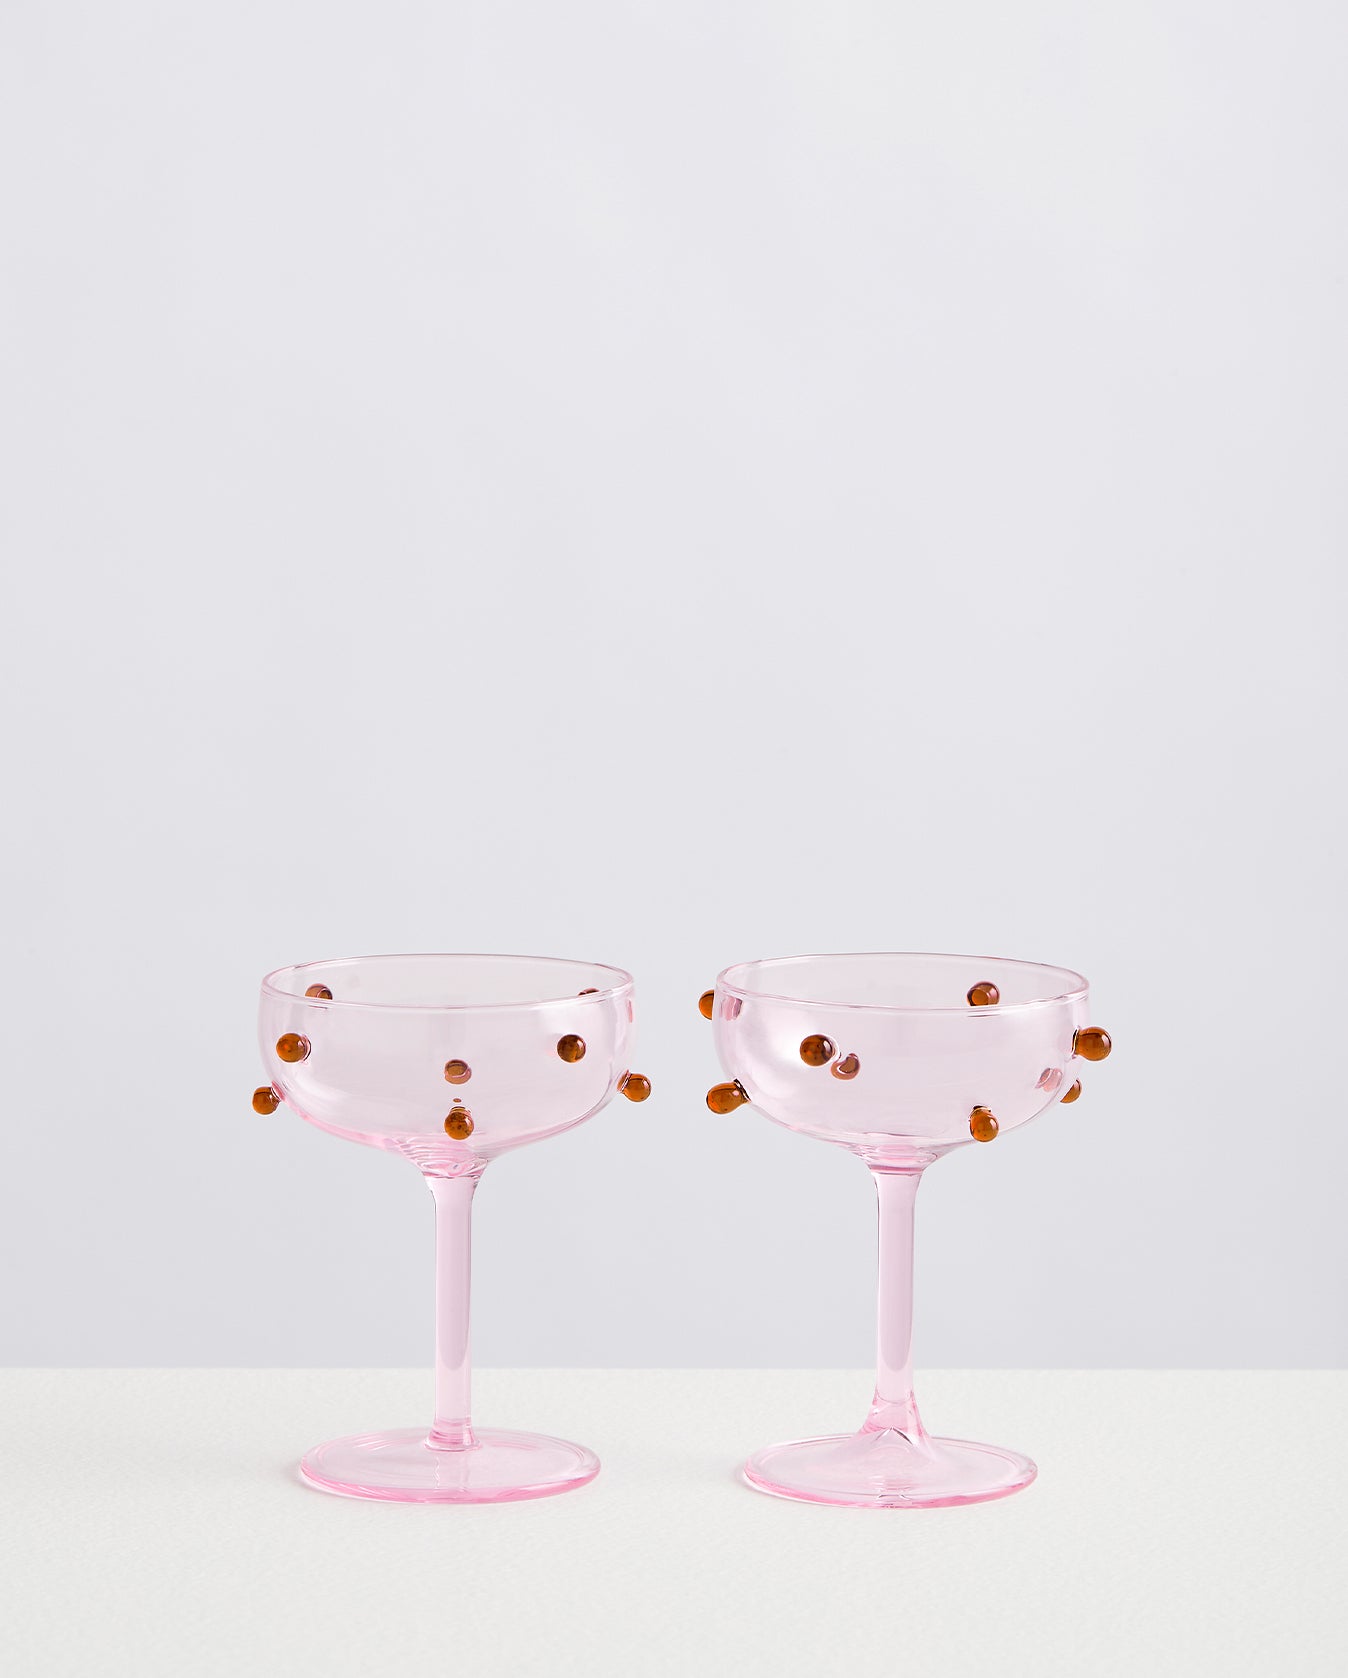 Maison Balzac Set of 4 Large Glasses Miel/ Pink/ Clear/ Amber